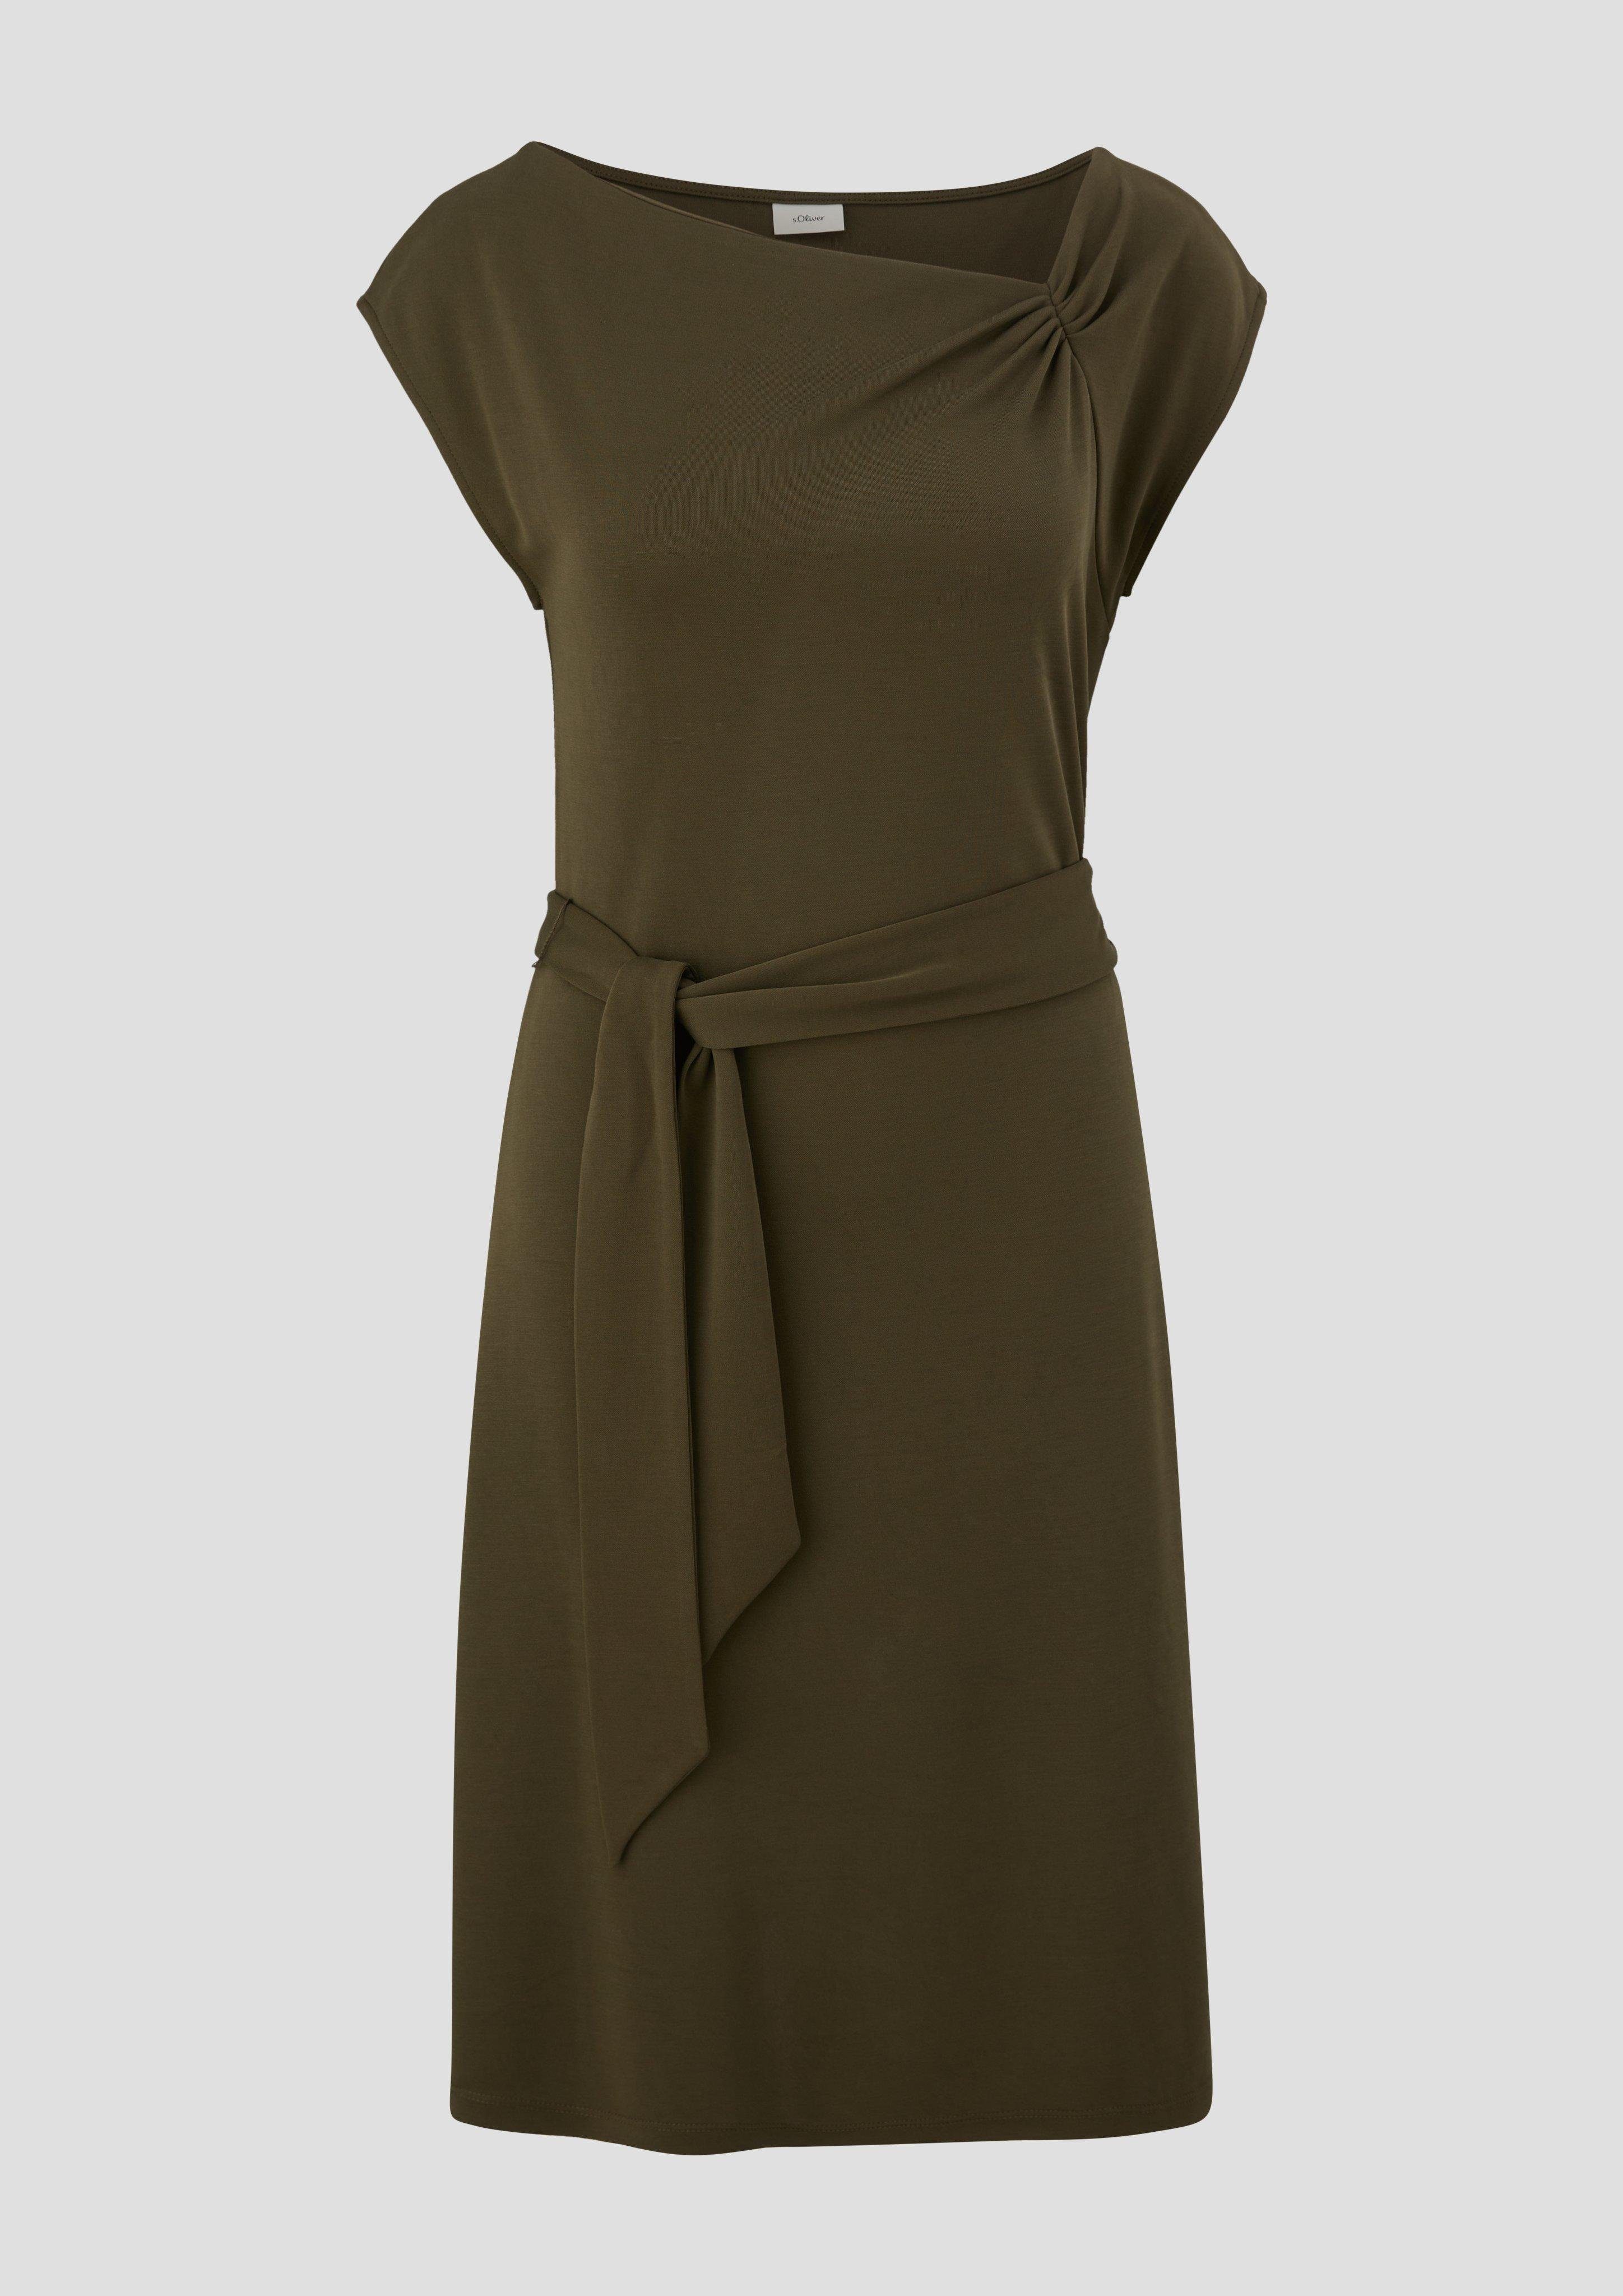 Minikleid s.Oliver mit olivgrün LABEL Kleid Kontrast-Details Knoten-Detail Kurzes BLACK